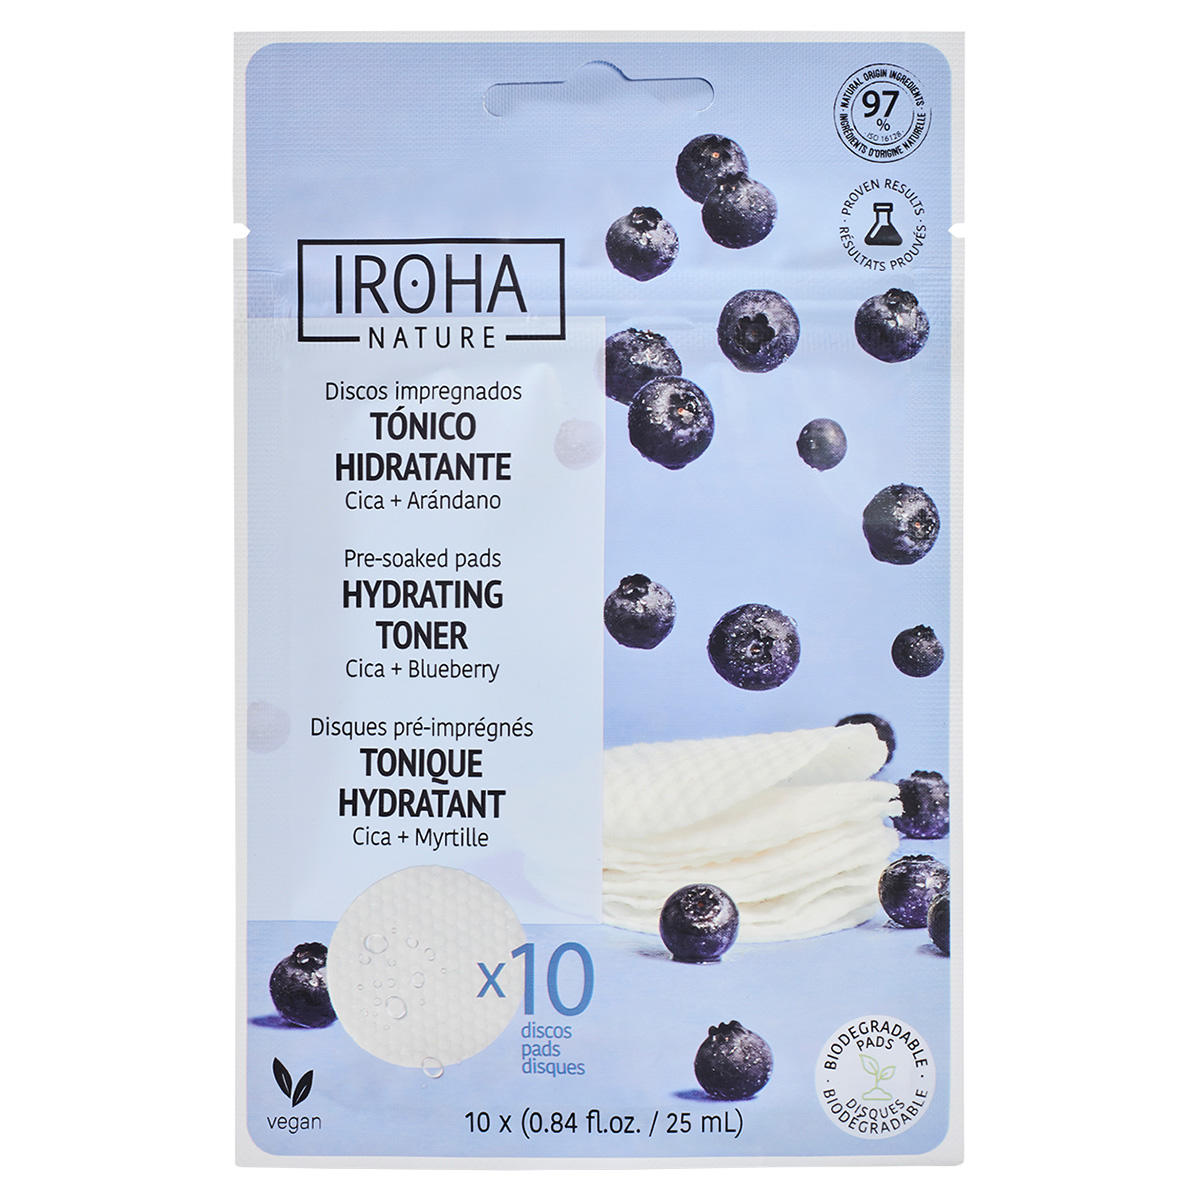 IROHA nature Hydrating Toner Pads Pro Packung 10 Stück - 1